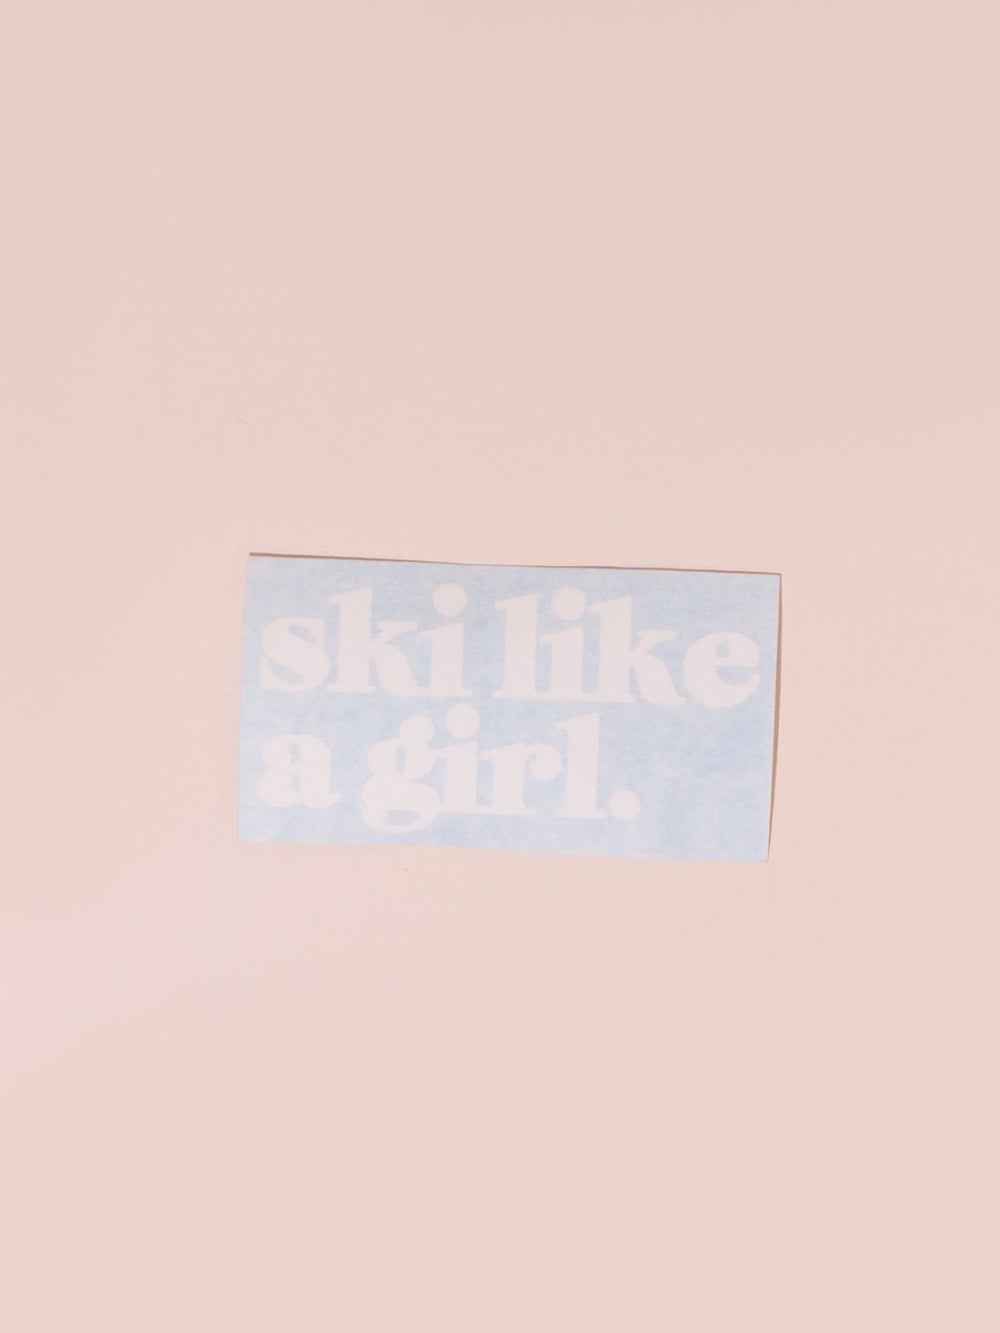 Ski Like A Girl Small White Sticker - Heyday